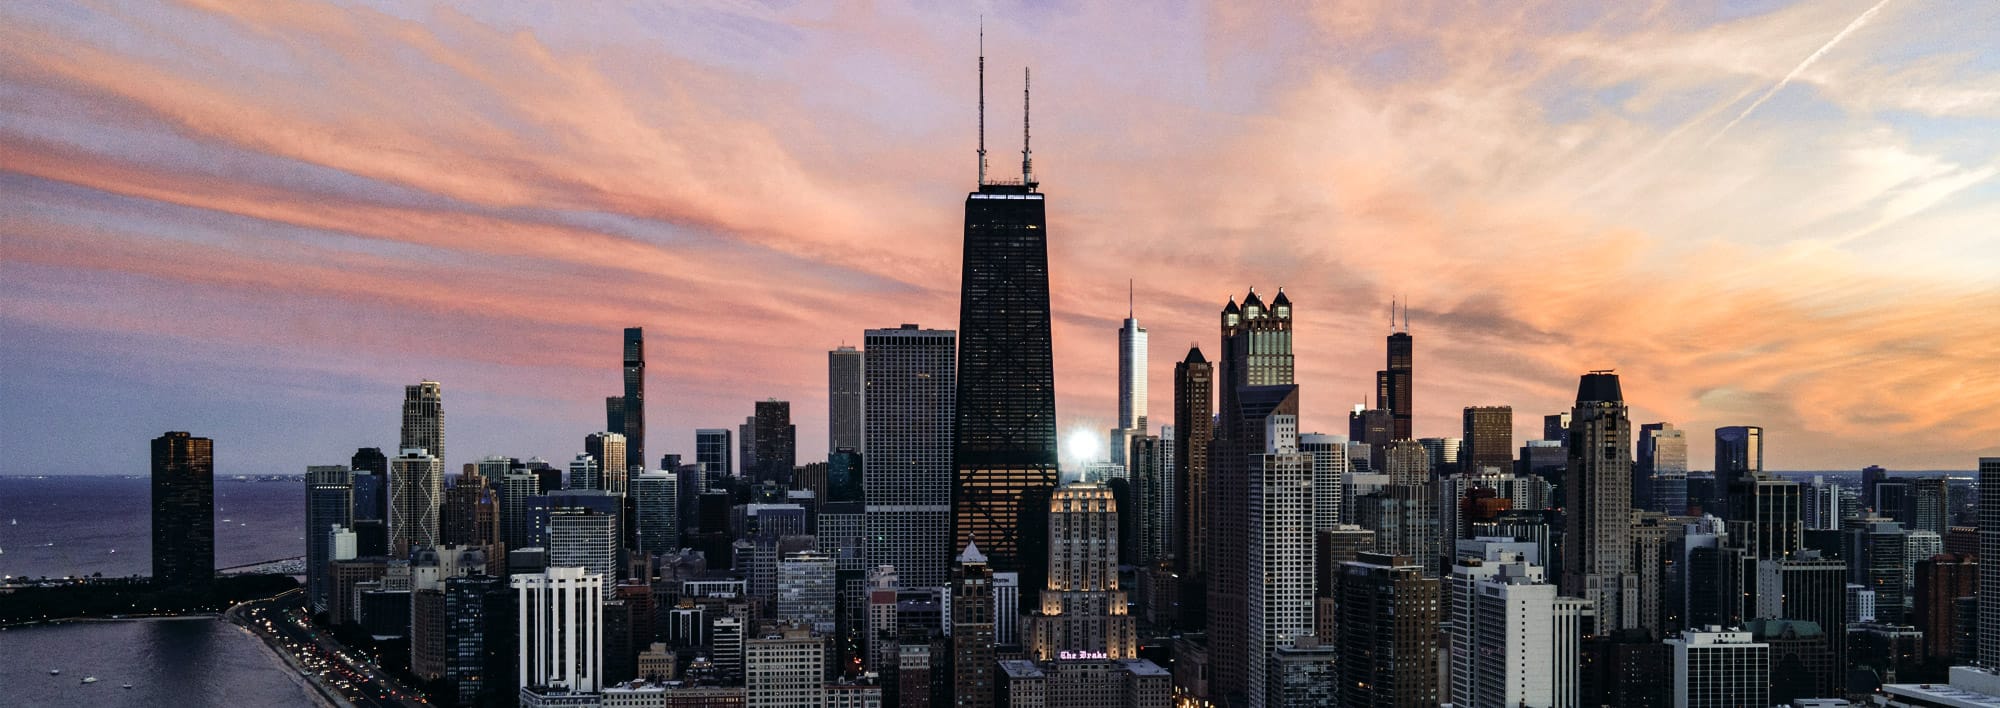 The Chicago skyline at dusk.